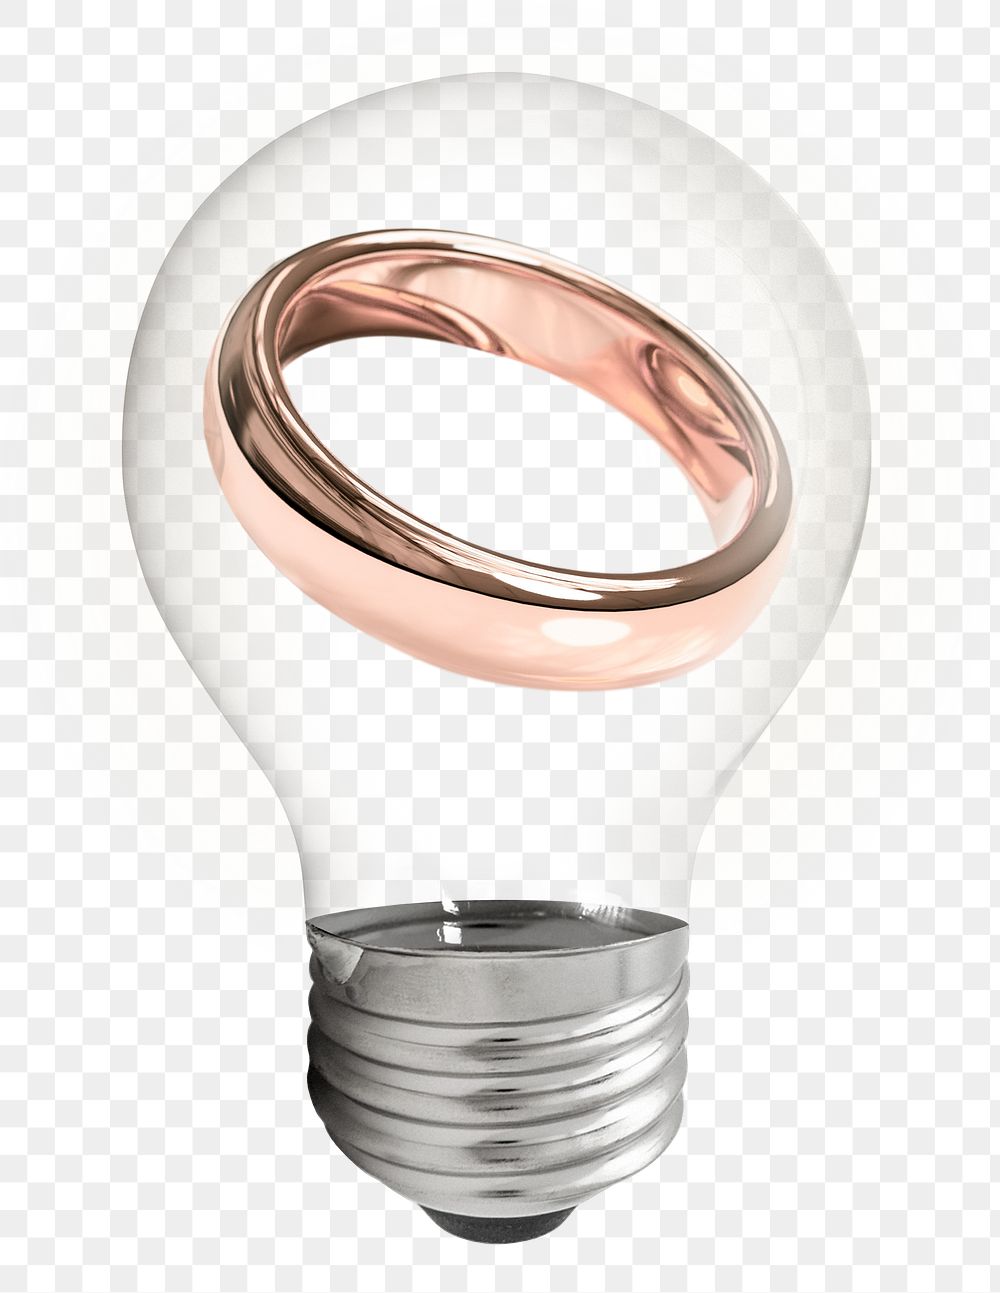 Png rose gold wedding ring sticker, light bulb creative remix on transparent background